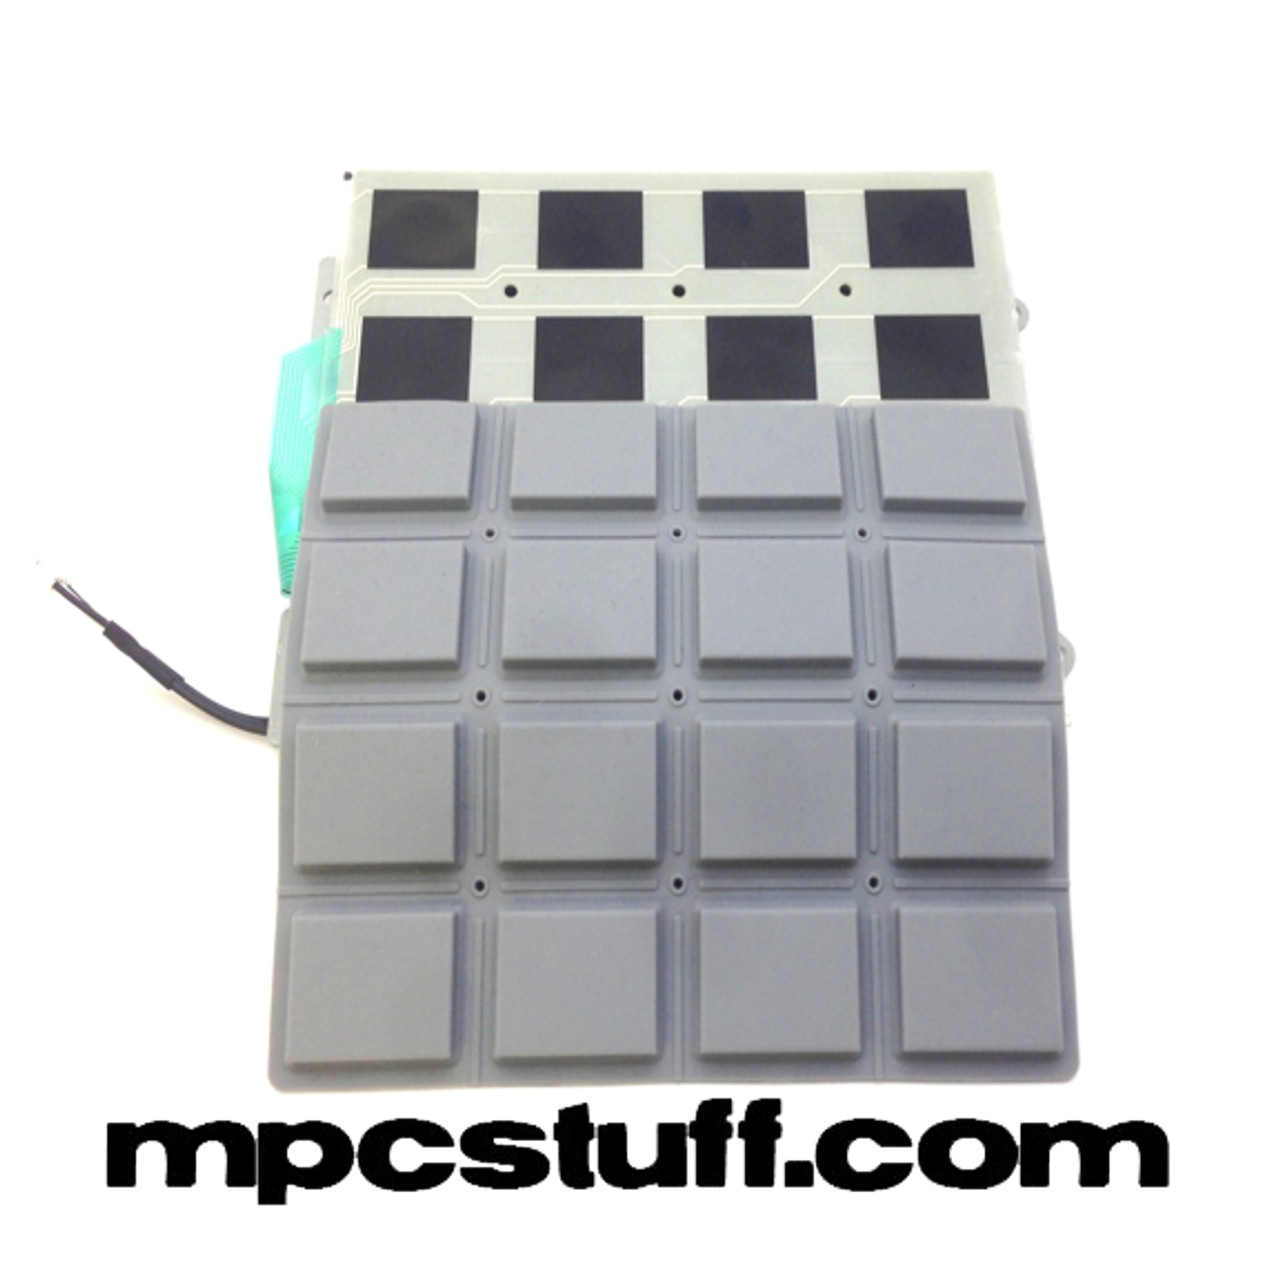 Agotamiento Firmar codo Akai MPC 1000 Pad Set - New Version Pad Fix Upgrade Kit